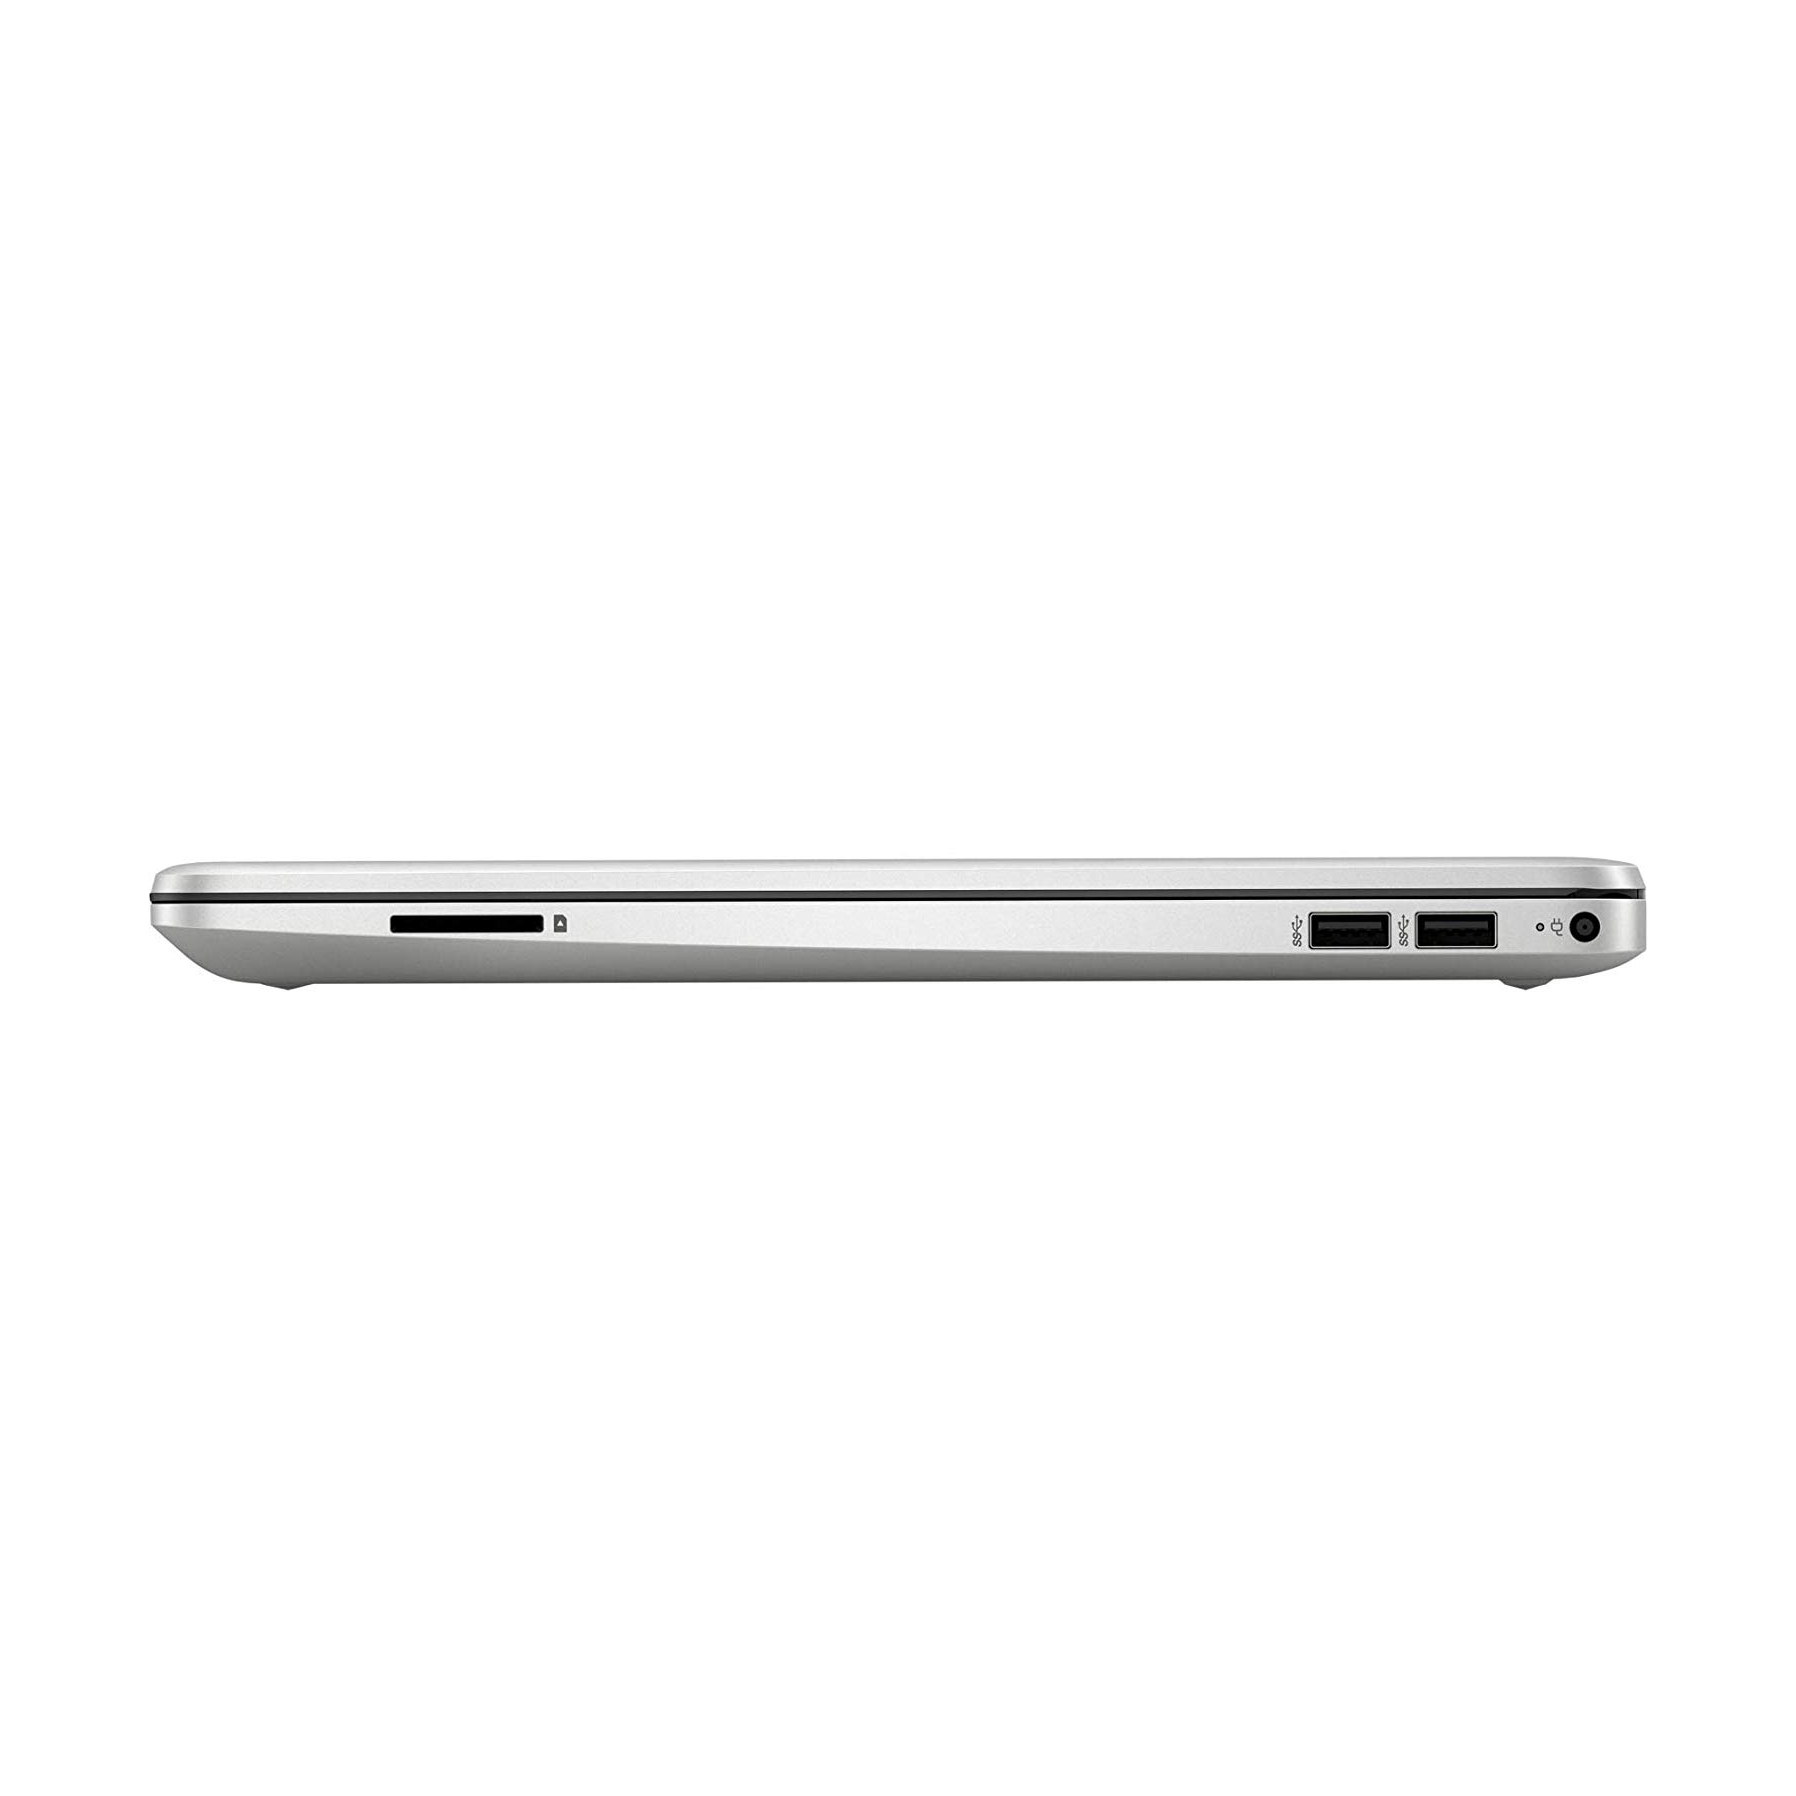 Laptop HP 15S Du0068TX (i5 8265U/8GB RAM/1TB HDD/120GB SSD M.2 Sata/MX130 2GB/15.6 inch HD/Win 10) - 8AG28PA